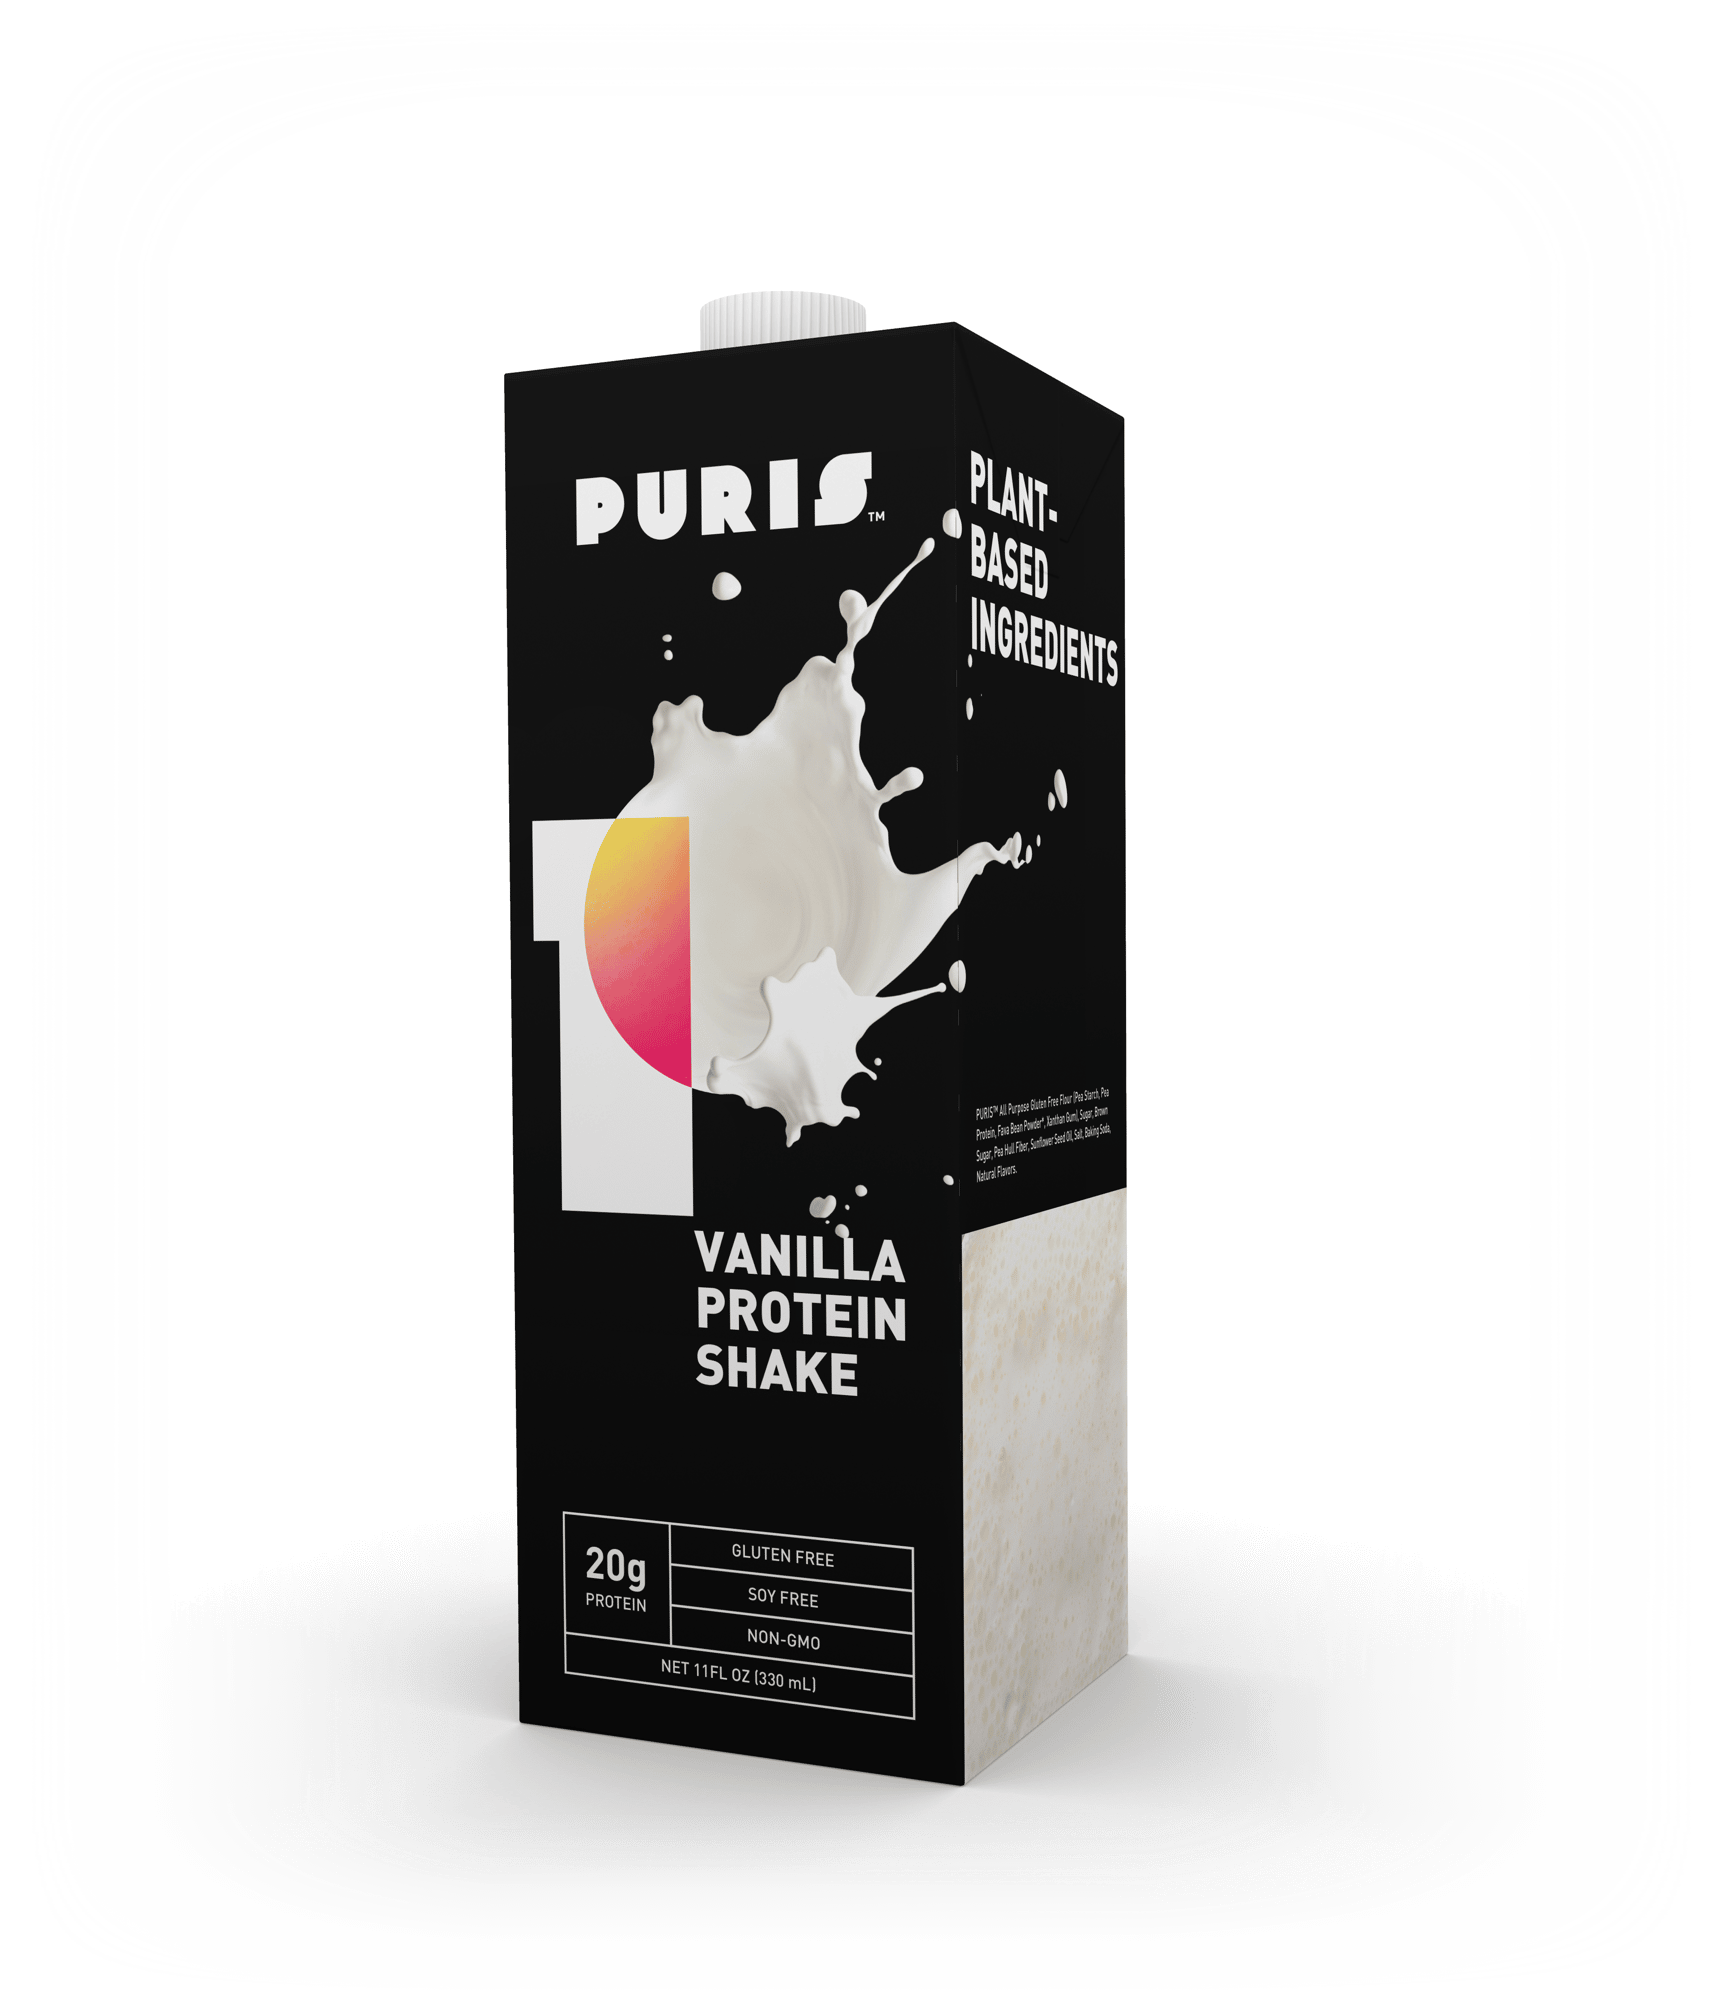 PURIS vanilla protein shake